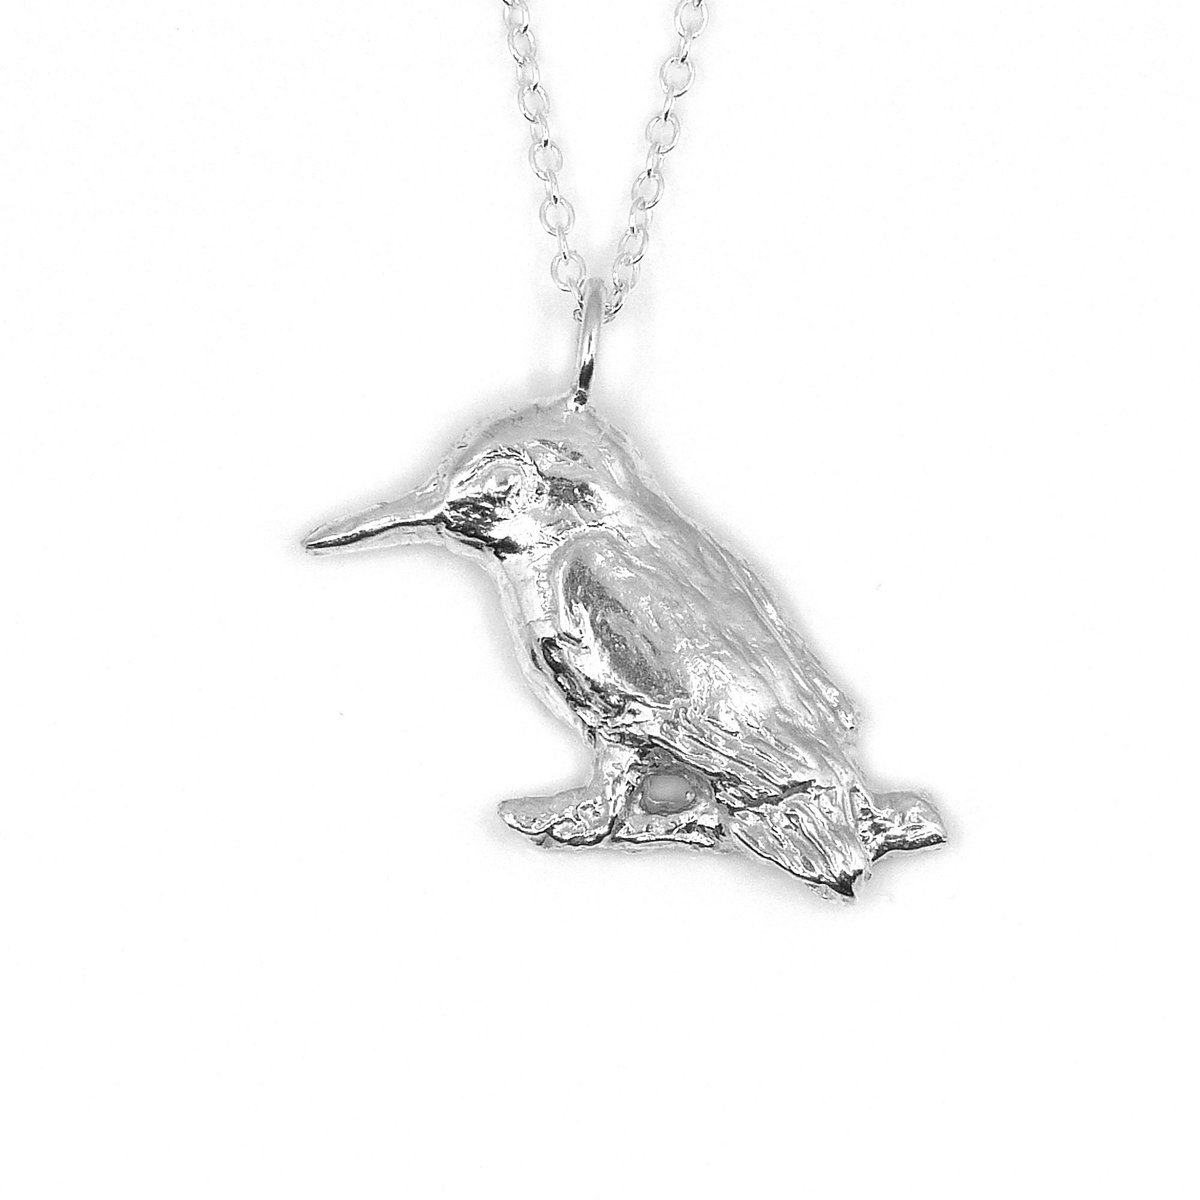 Sterling Silver Kingfisher Pendant Silver Bird Necklace Birthday Gift Nature Lover tuppu.net/24da3135 #shopindie #womaninbizhour #UKGiftHour #elevenseshour #EarlyBiz #HandmadeHour #thestrandline #MHHSBD #UKGiftAM #craftbizparty